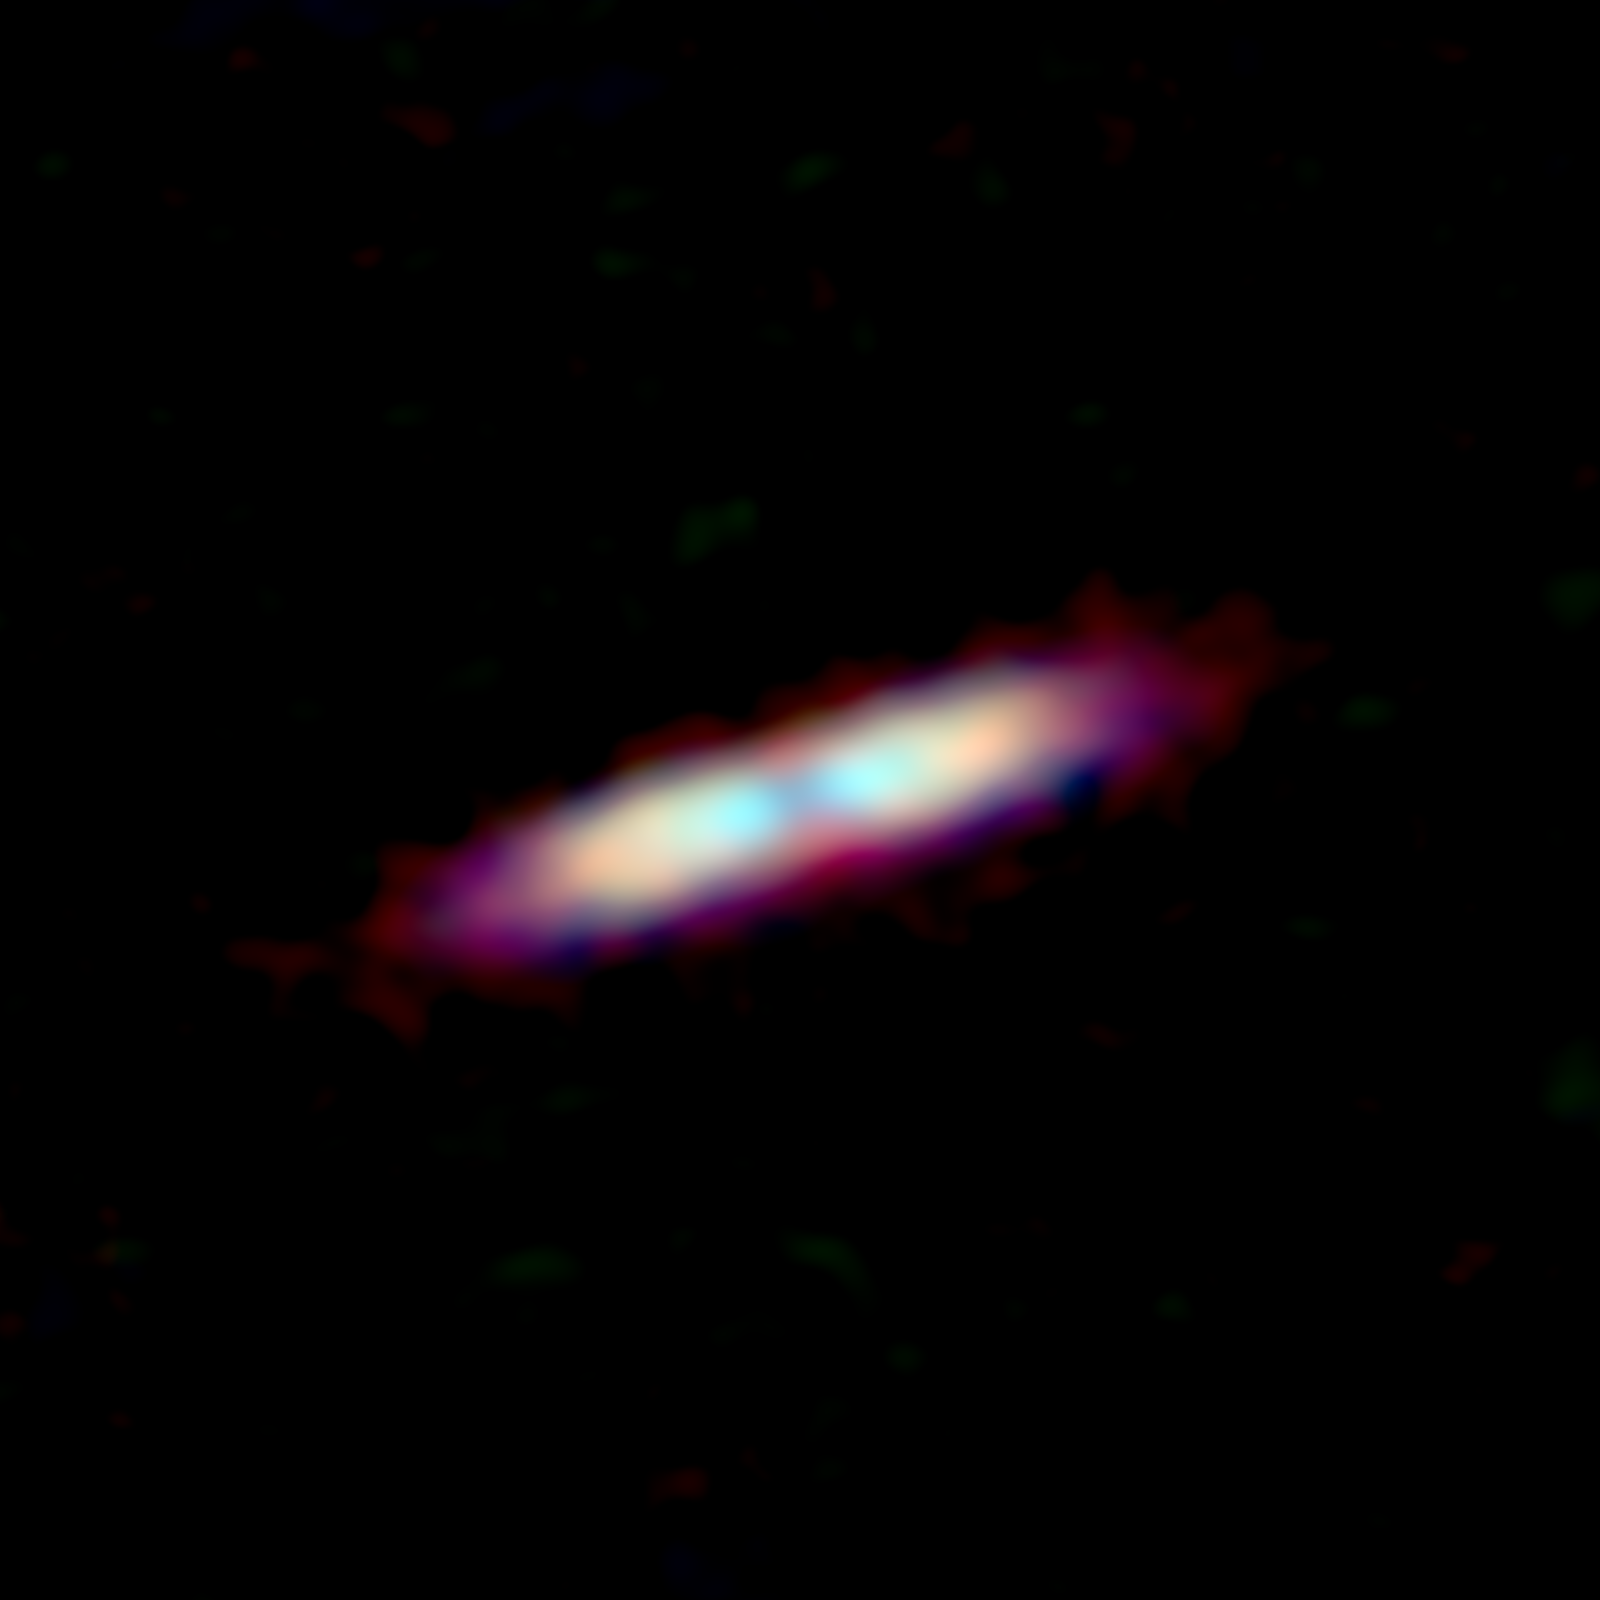 https://alma-telescope.jp/assets/uploads/2019/12/20191223_Higuchi_49Ceti_ALMA_composite.png